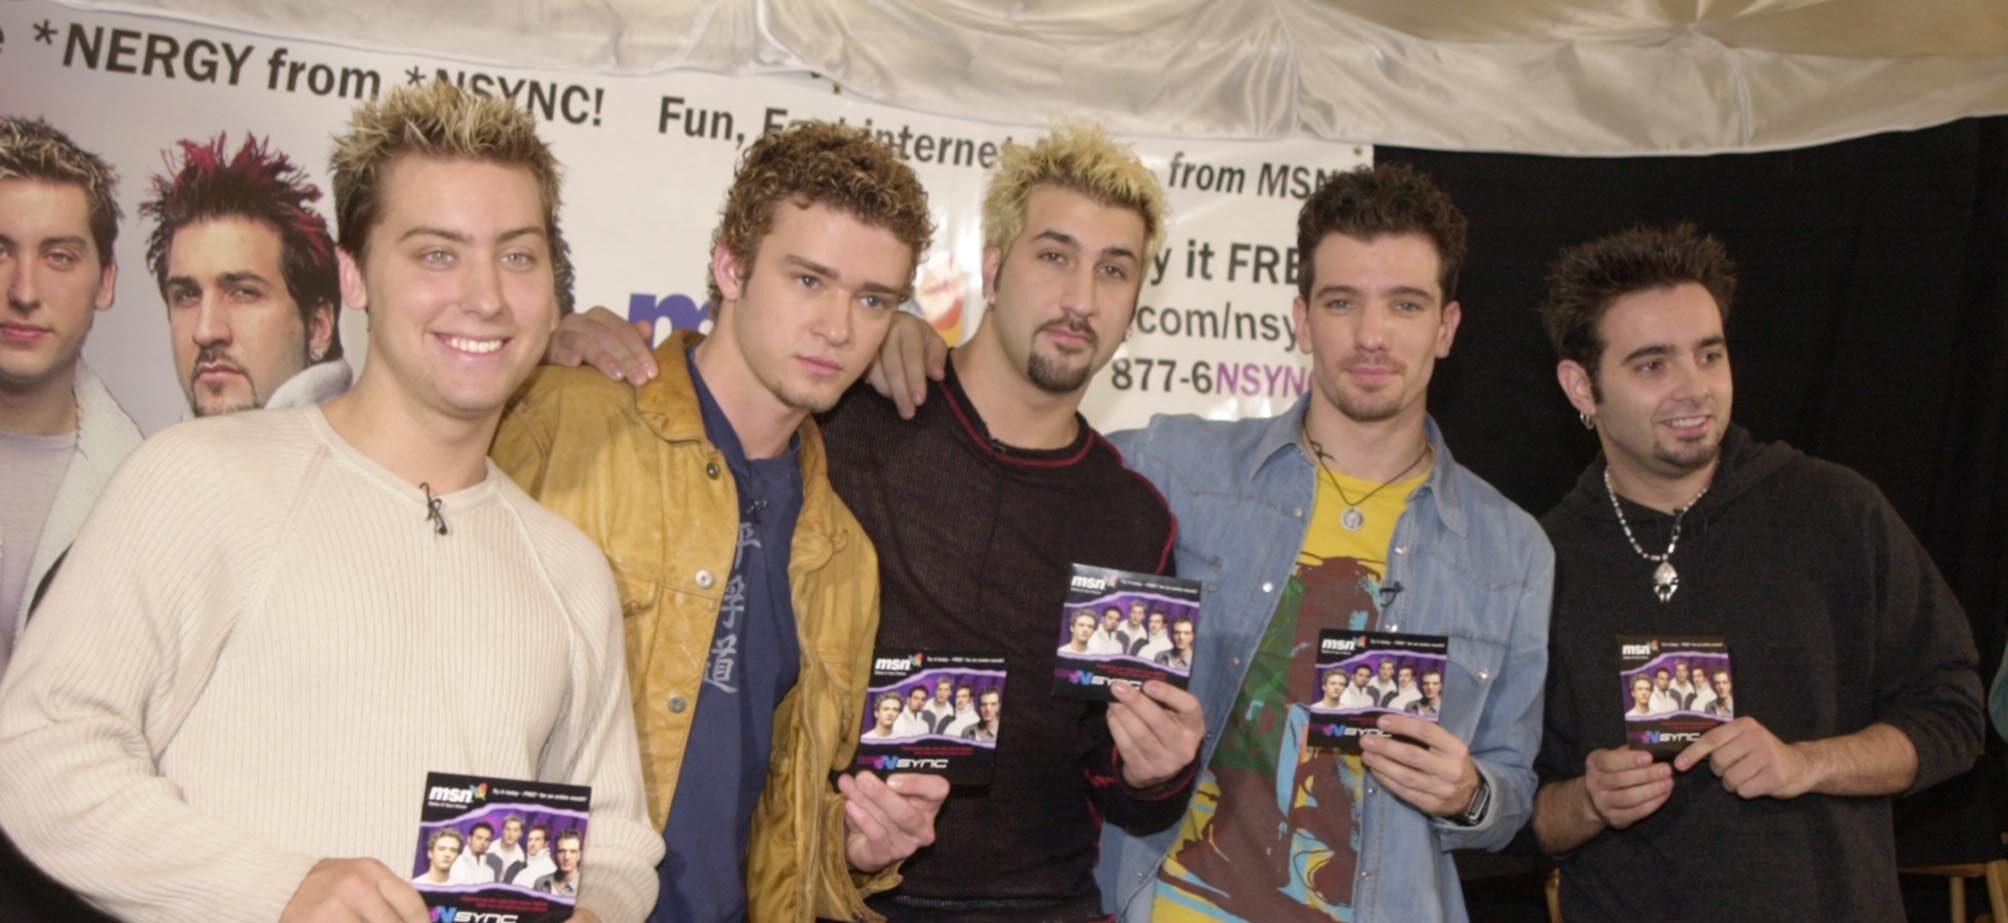 Backstreet Boys Says Justin Timberlake Influenced a Track on New Album